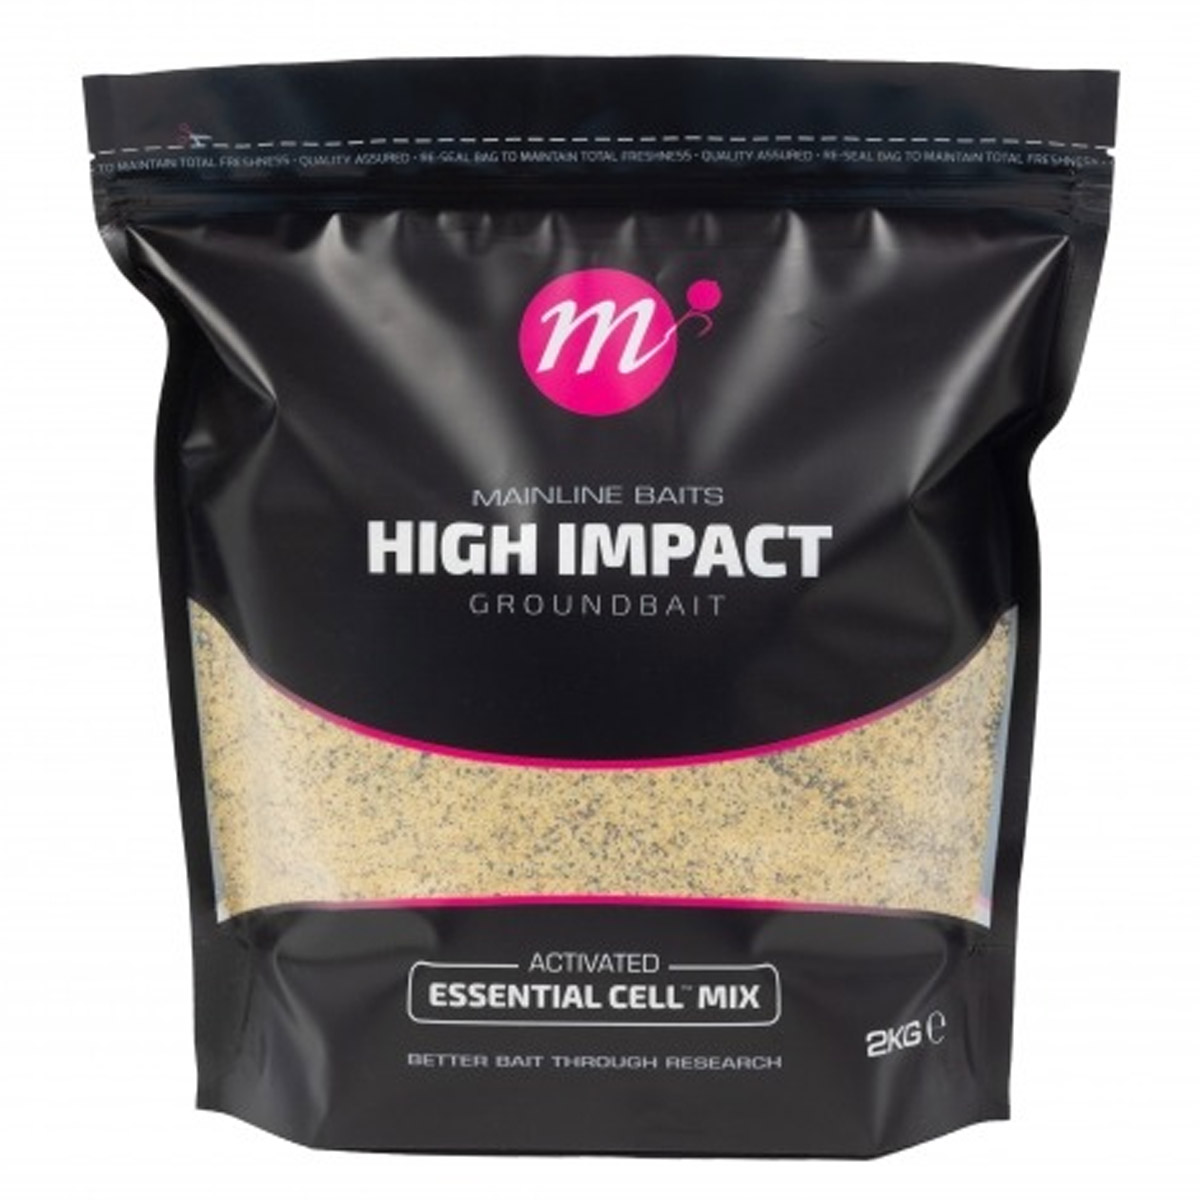 Mainline High Impact Groundbait-Essential Cell